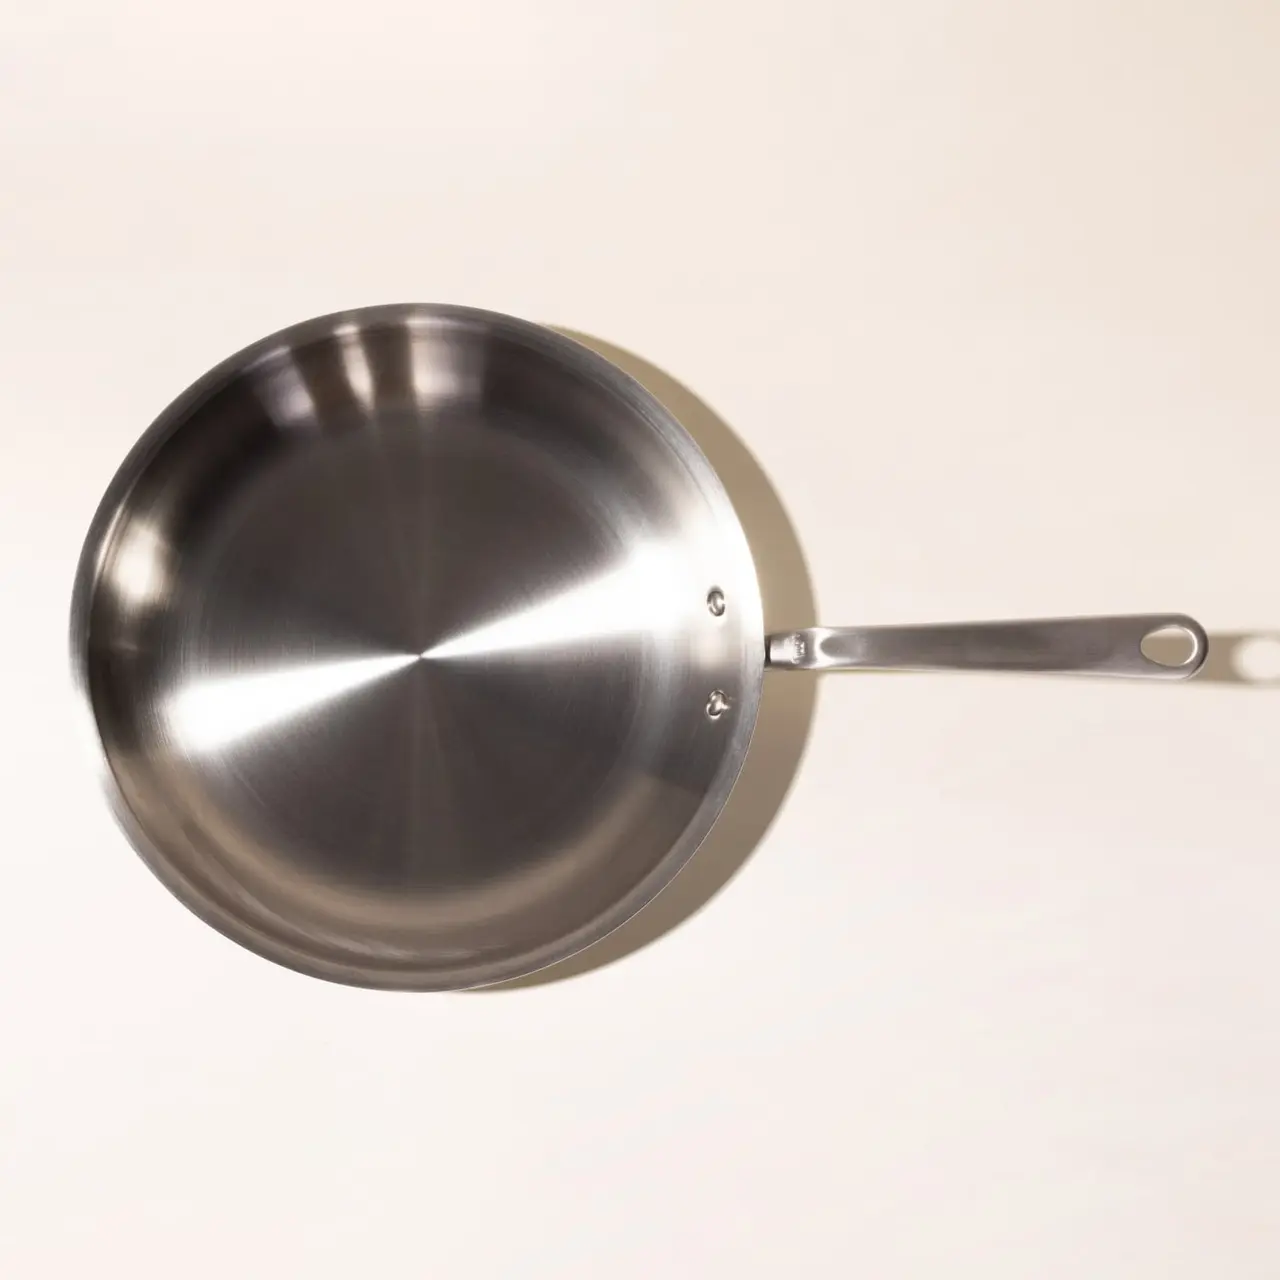 frying pan 12 inch top image